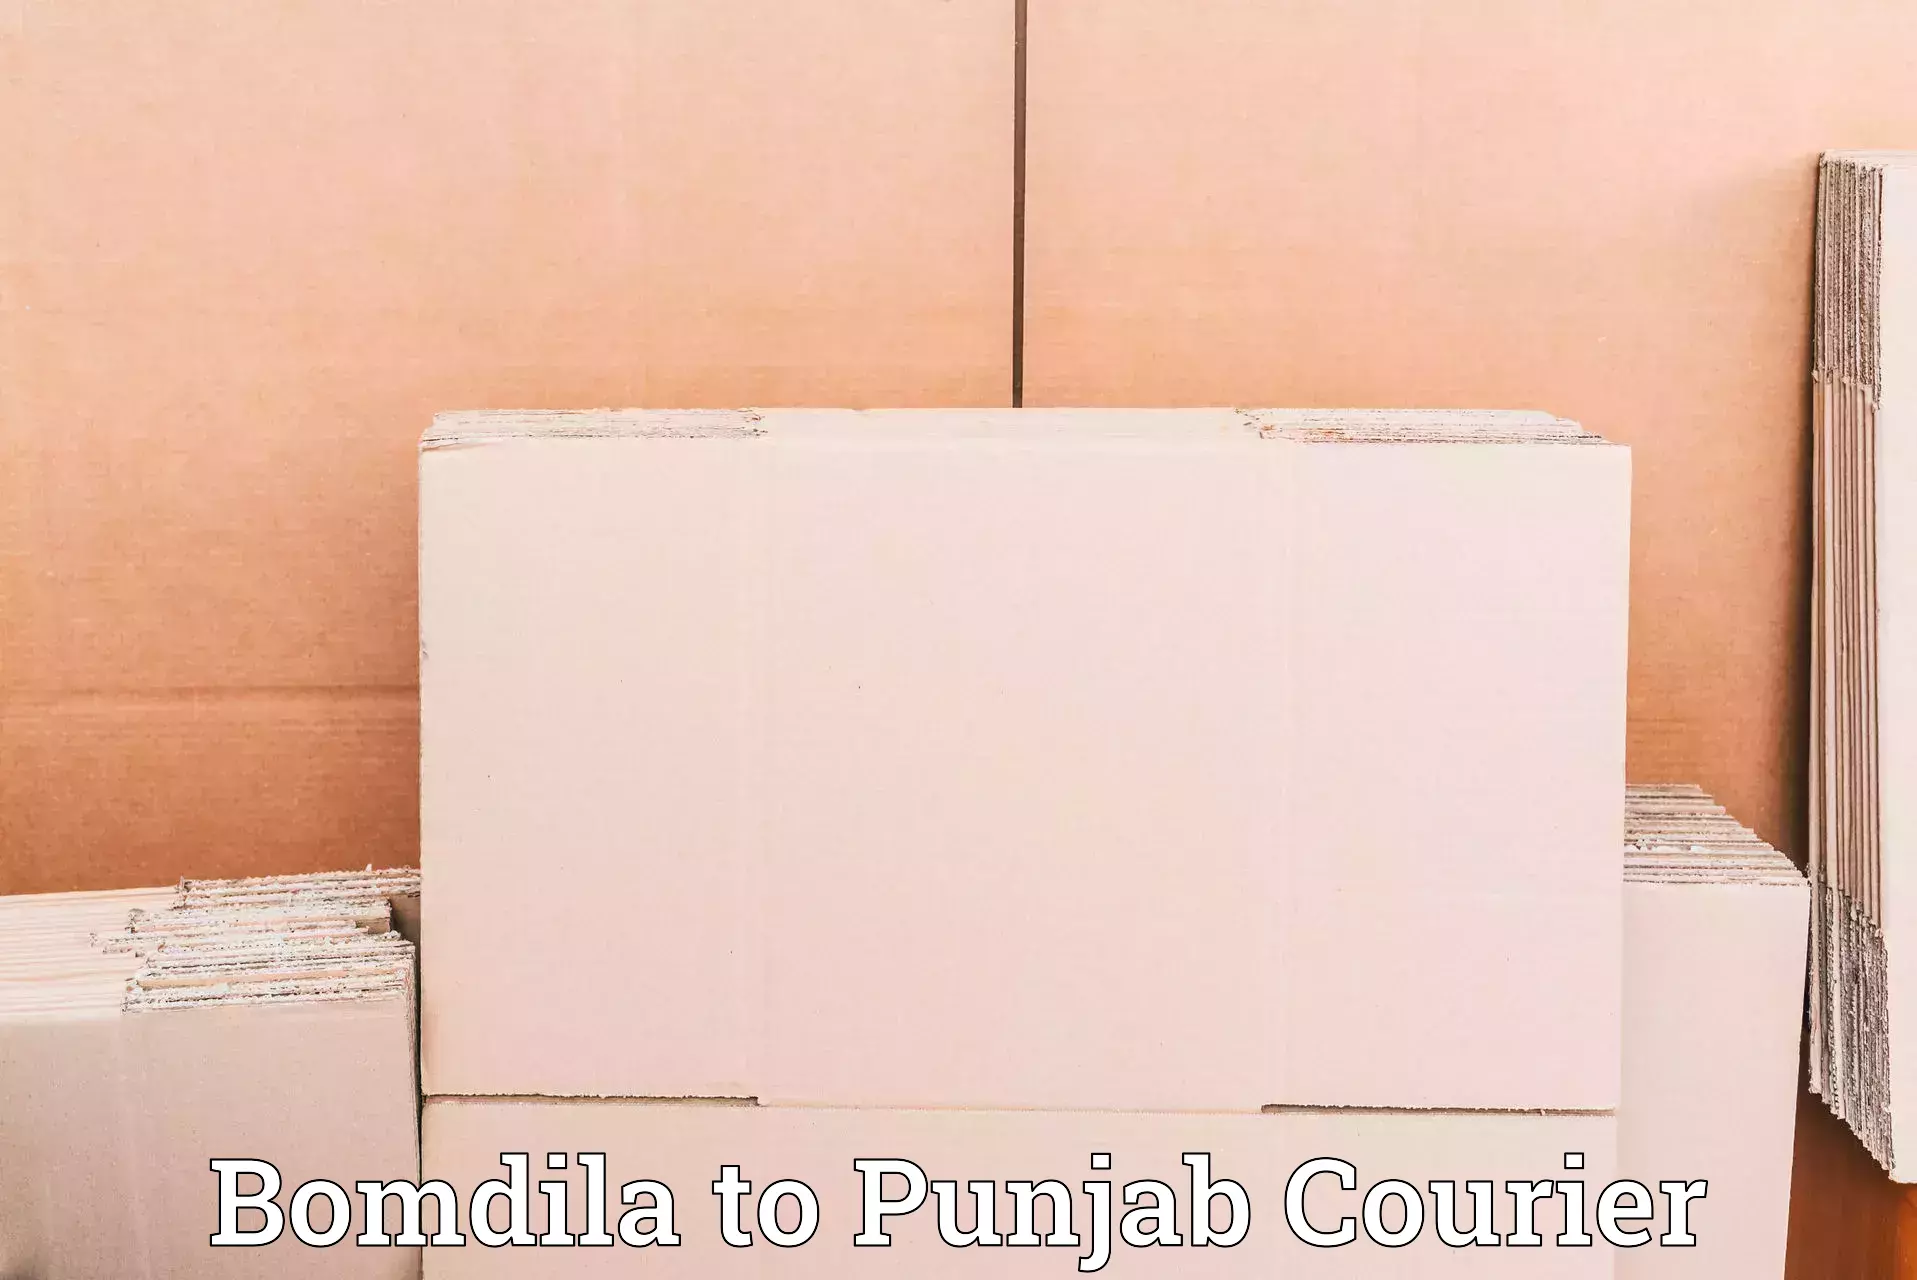 Efficient cargo handling Bomdila to Punjab